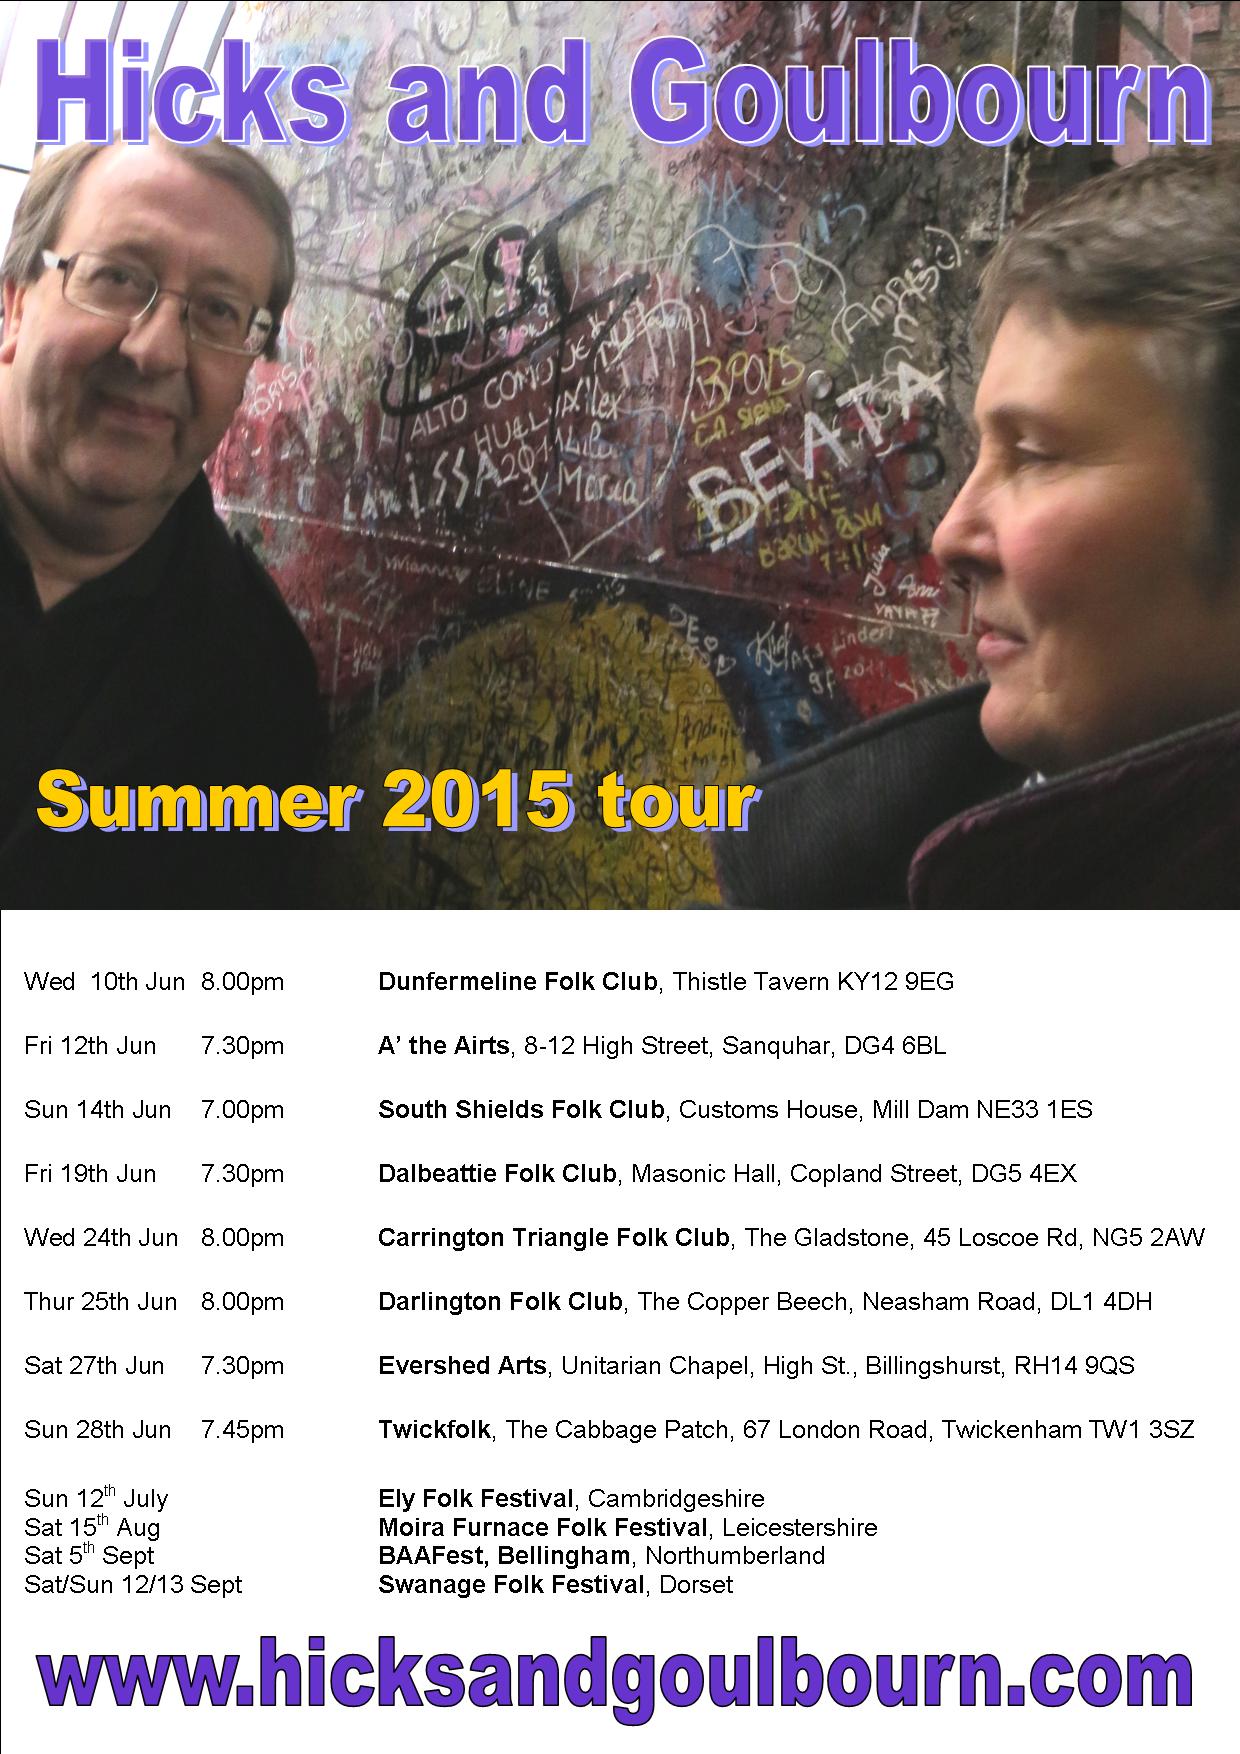 Hicks and Goulbourn tour dates summer 2015